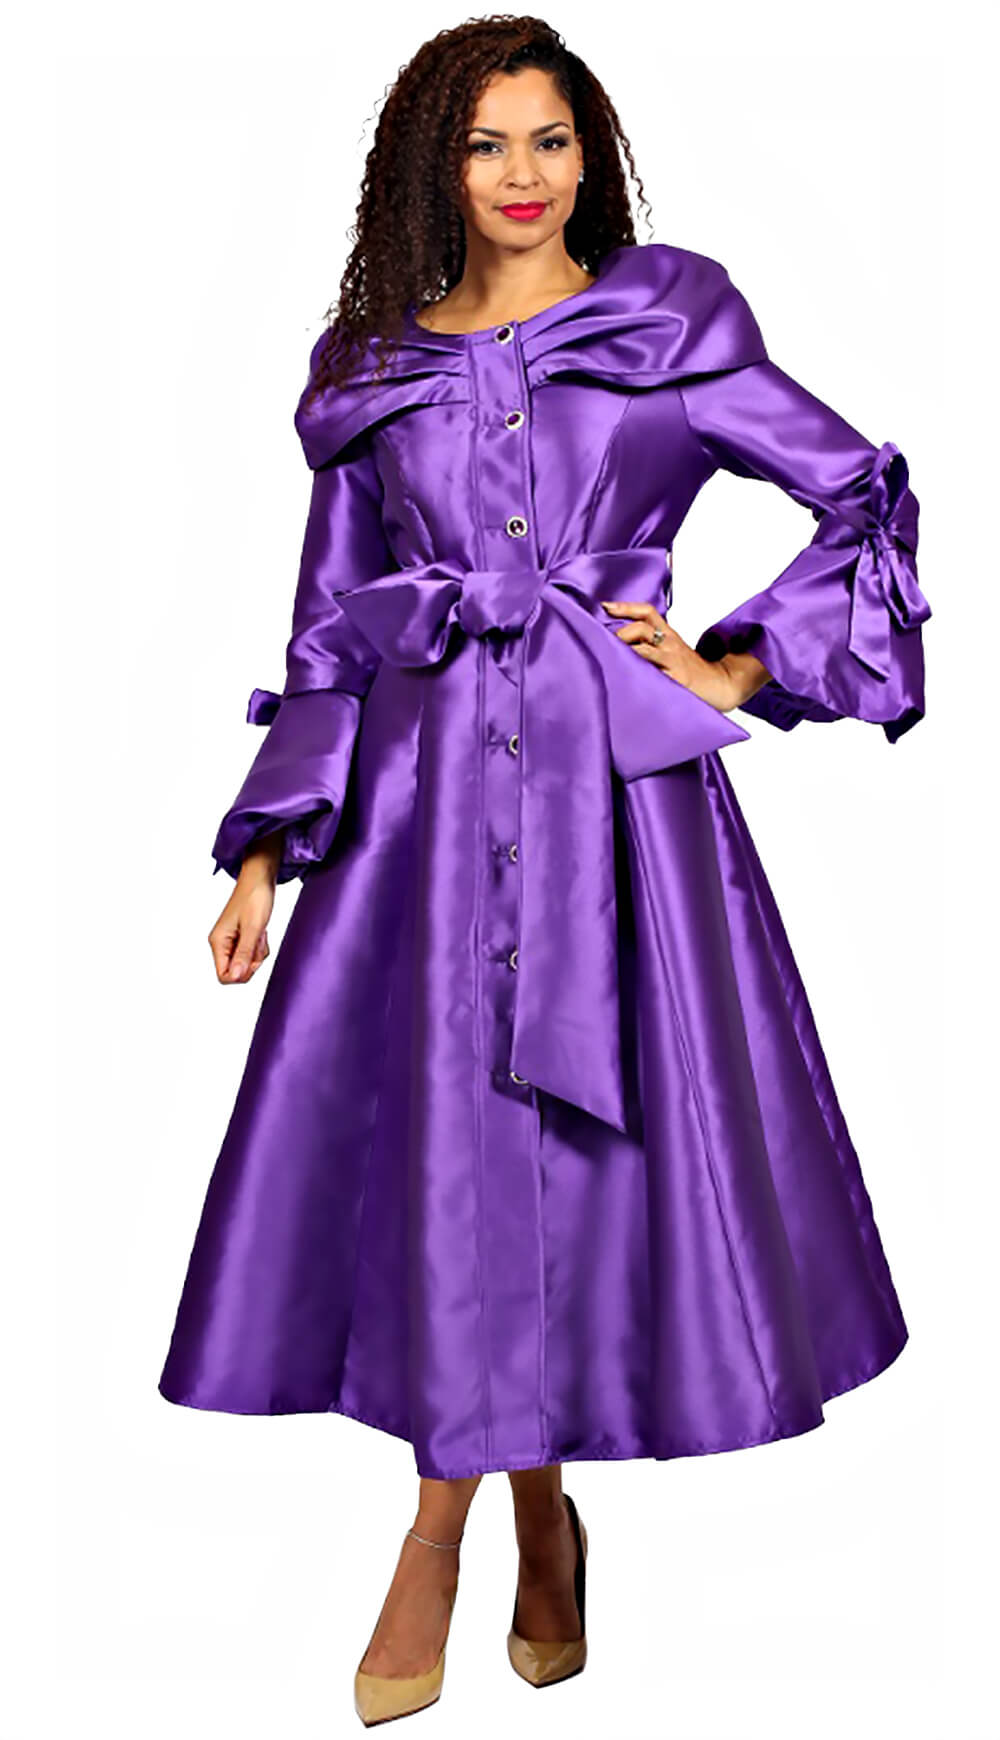 Diana Church Robe 8707-Purple - Church Suits For Less